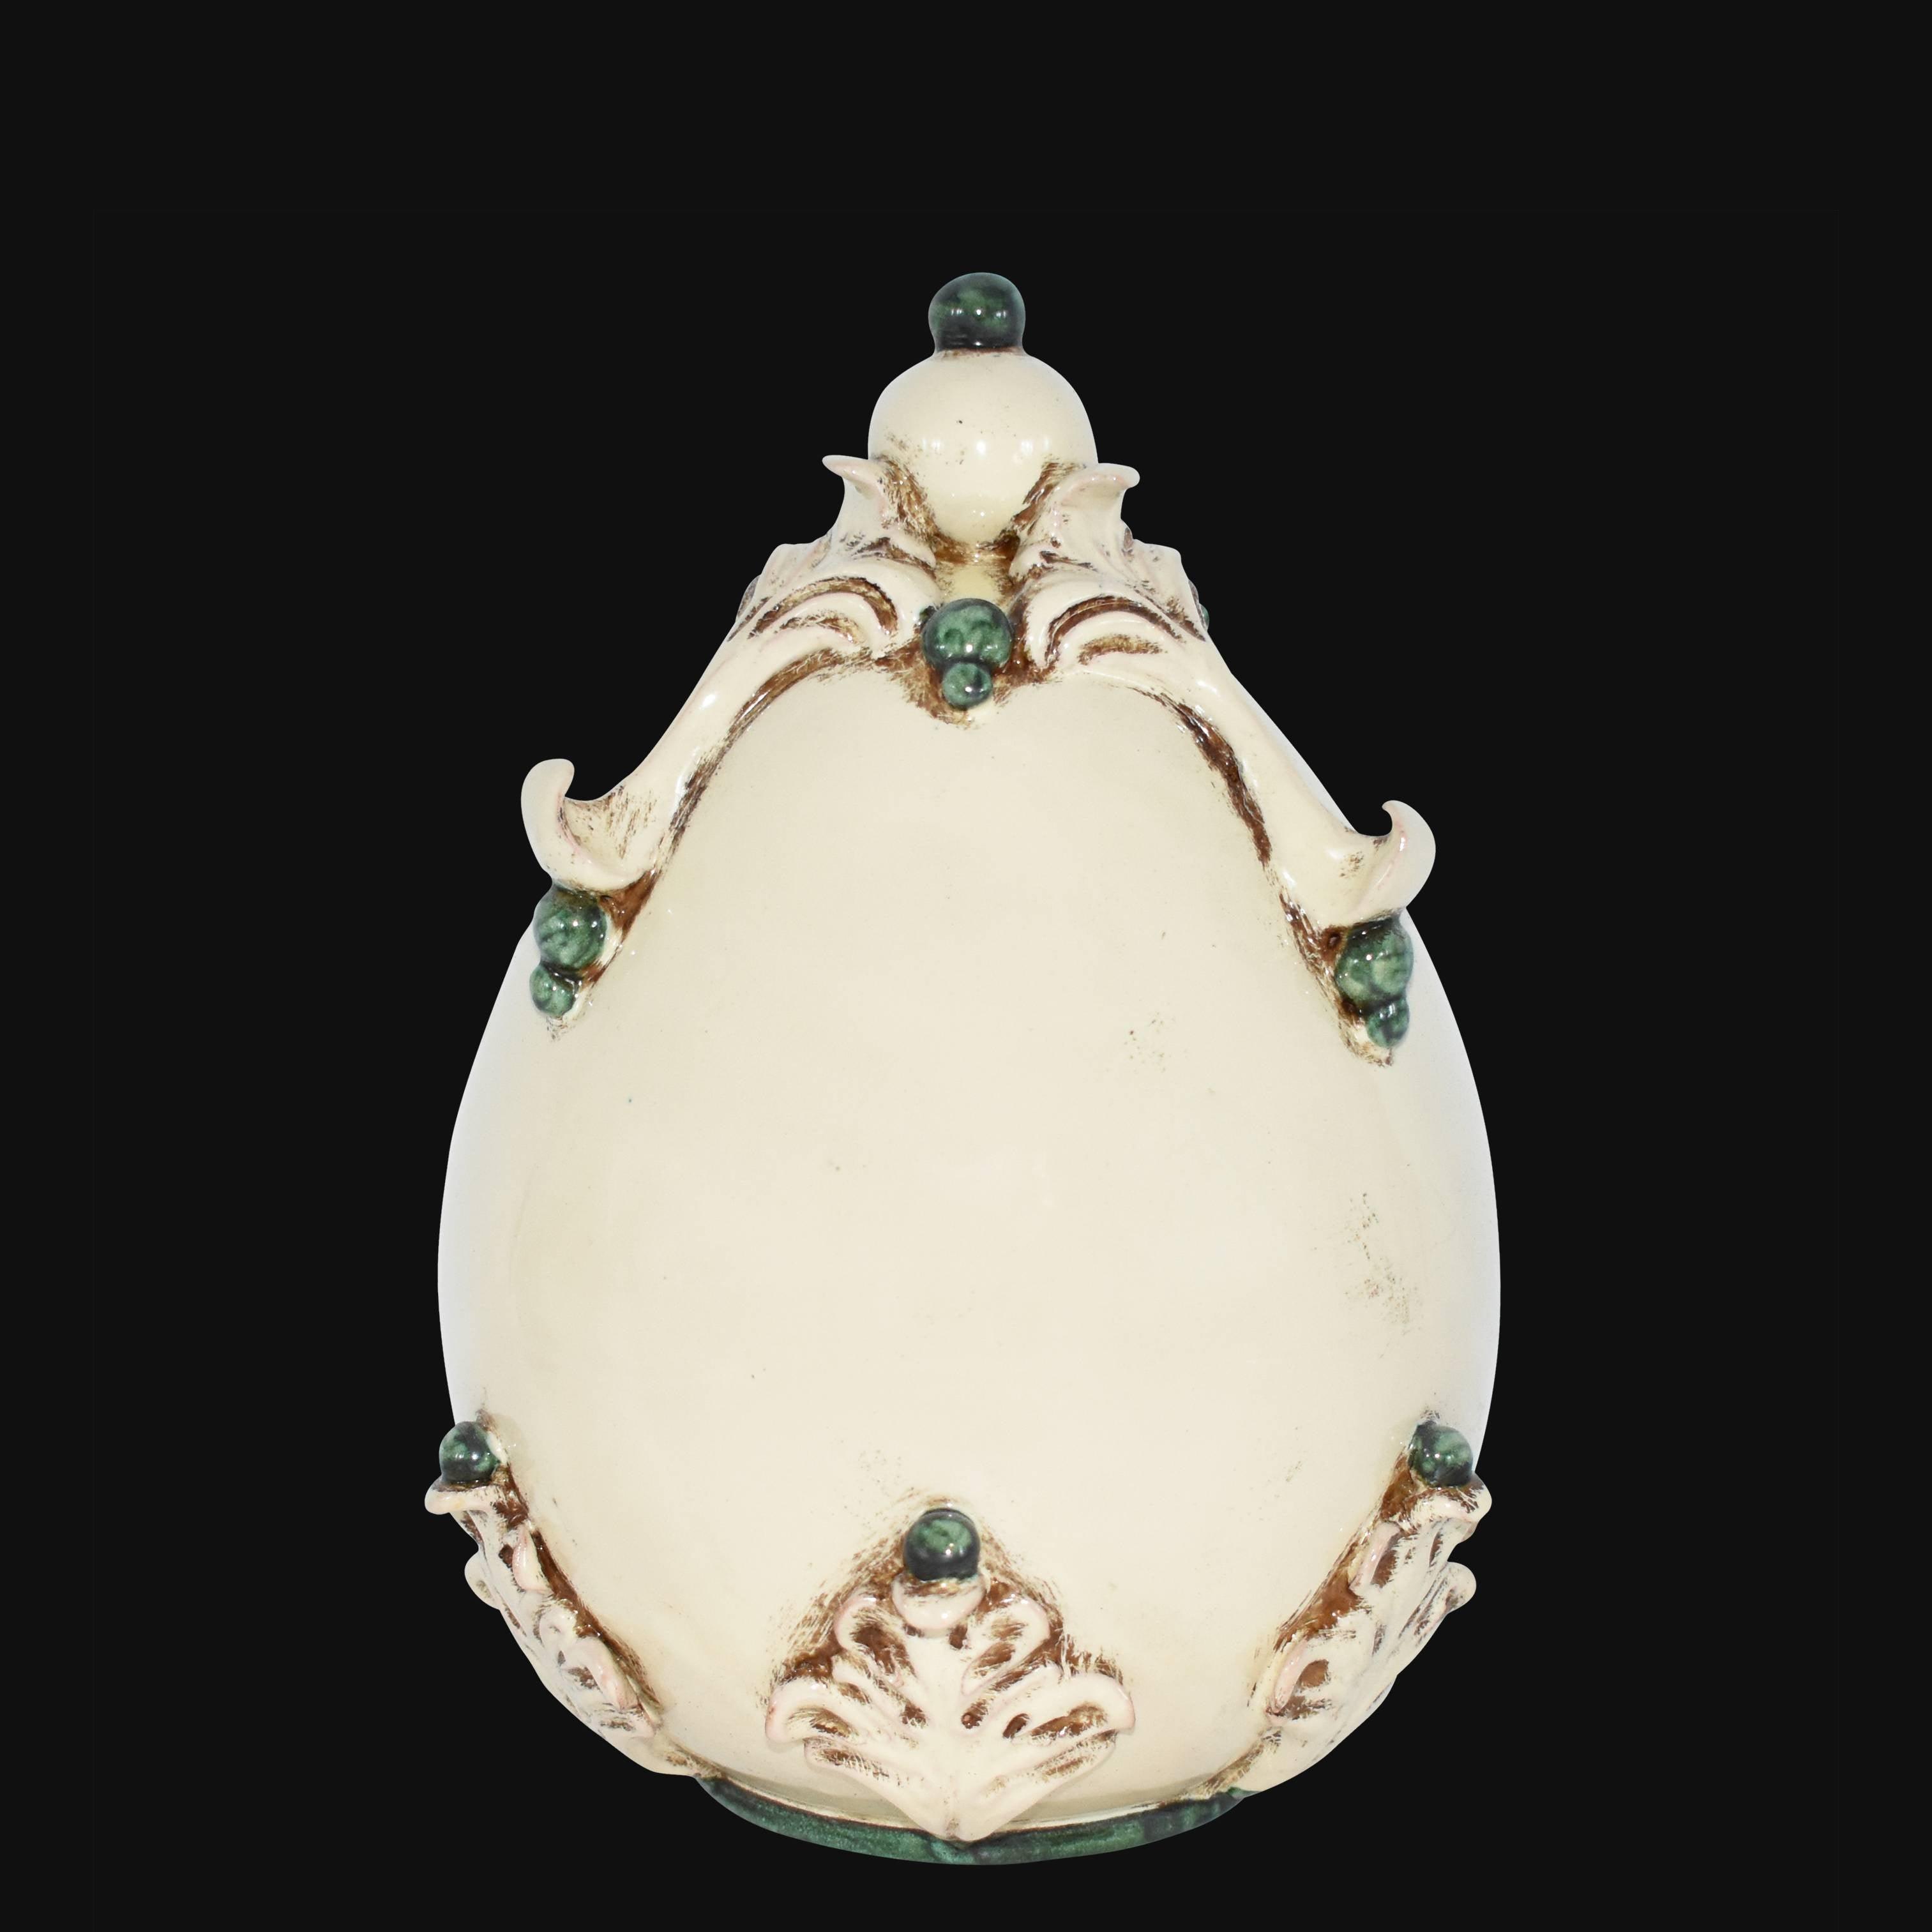 Uovo in ceramica h 22 plastico Sofia Avorio e Verde - Ceramiche di Caltagirone - Ceramiche di Caltagirone Sofia